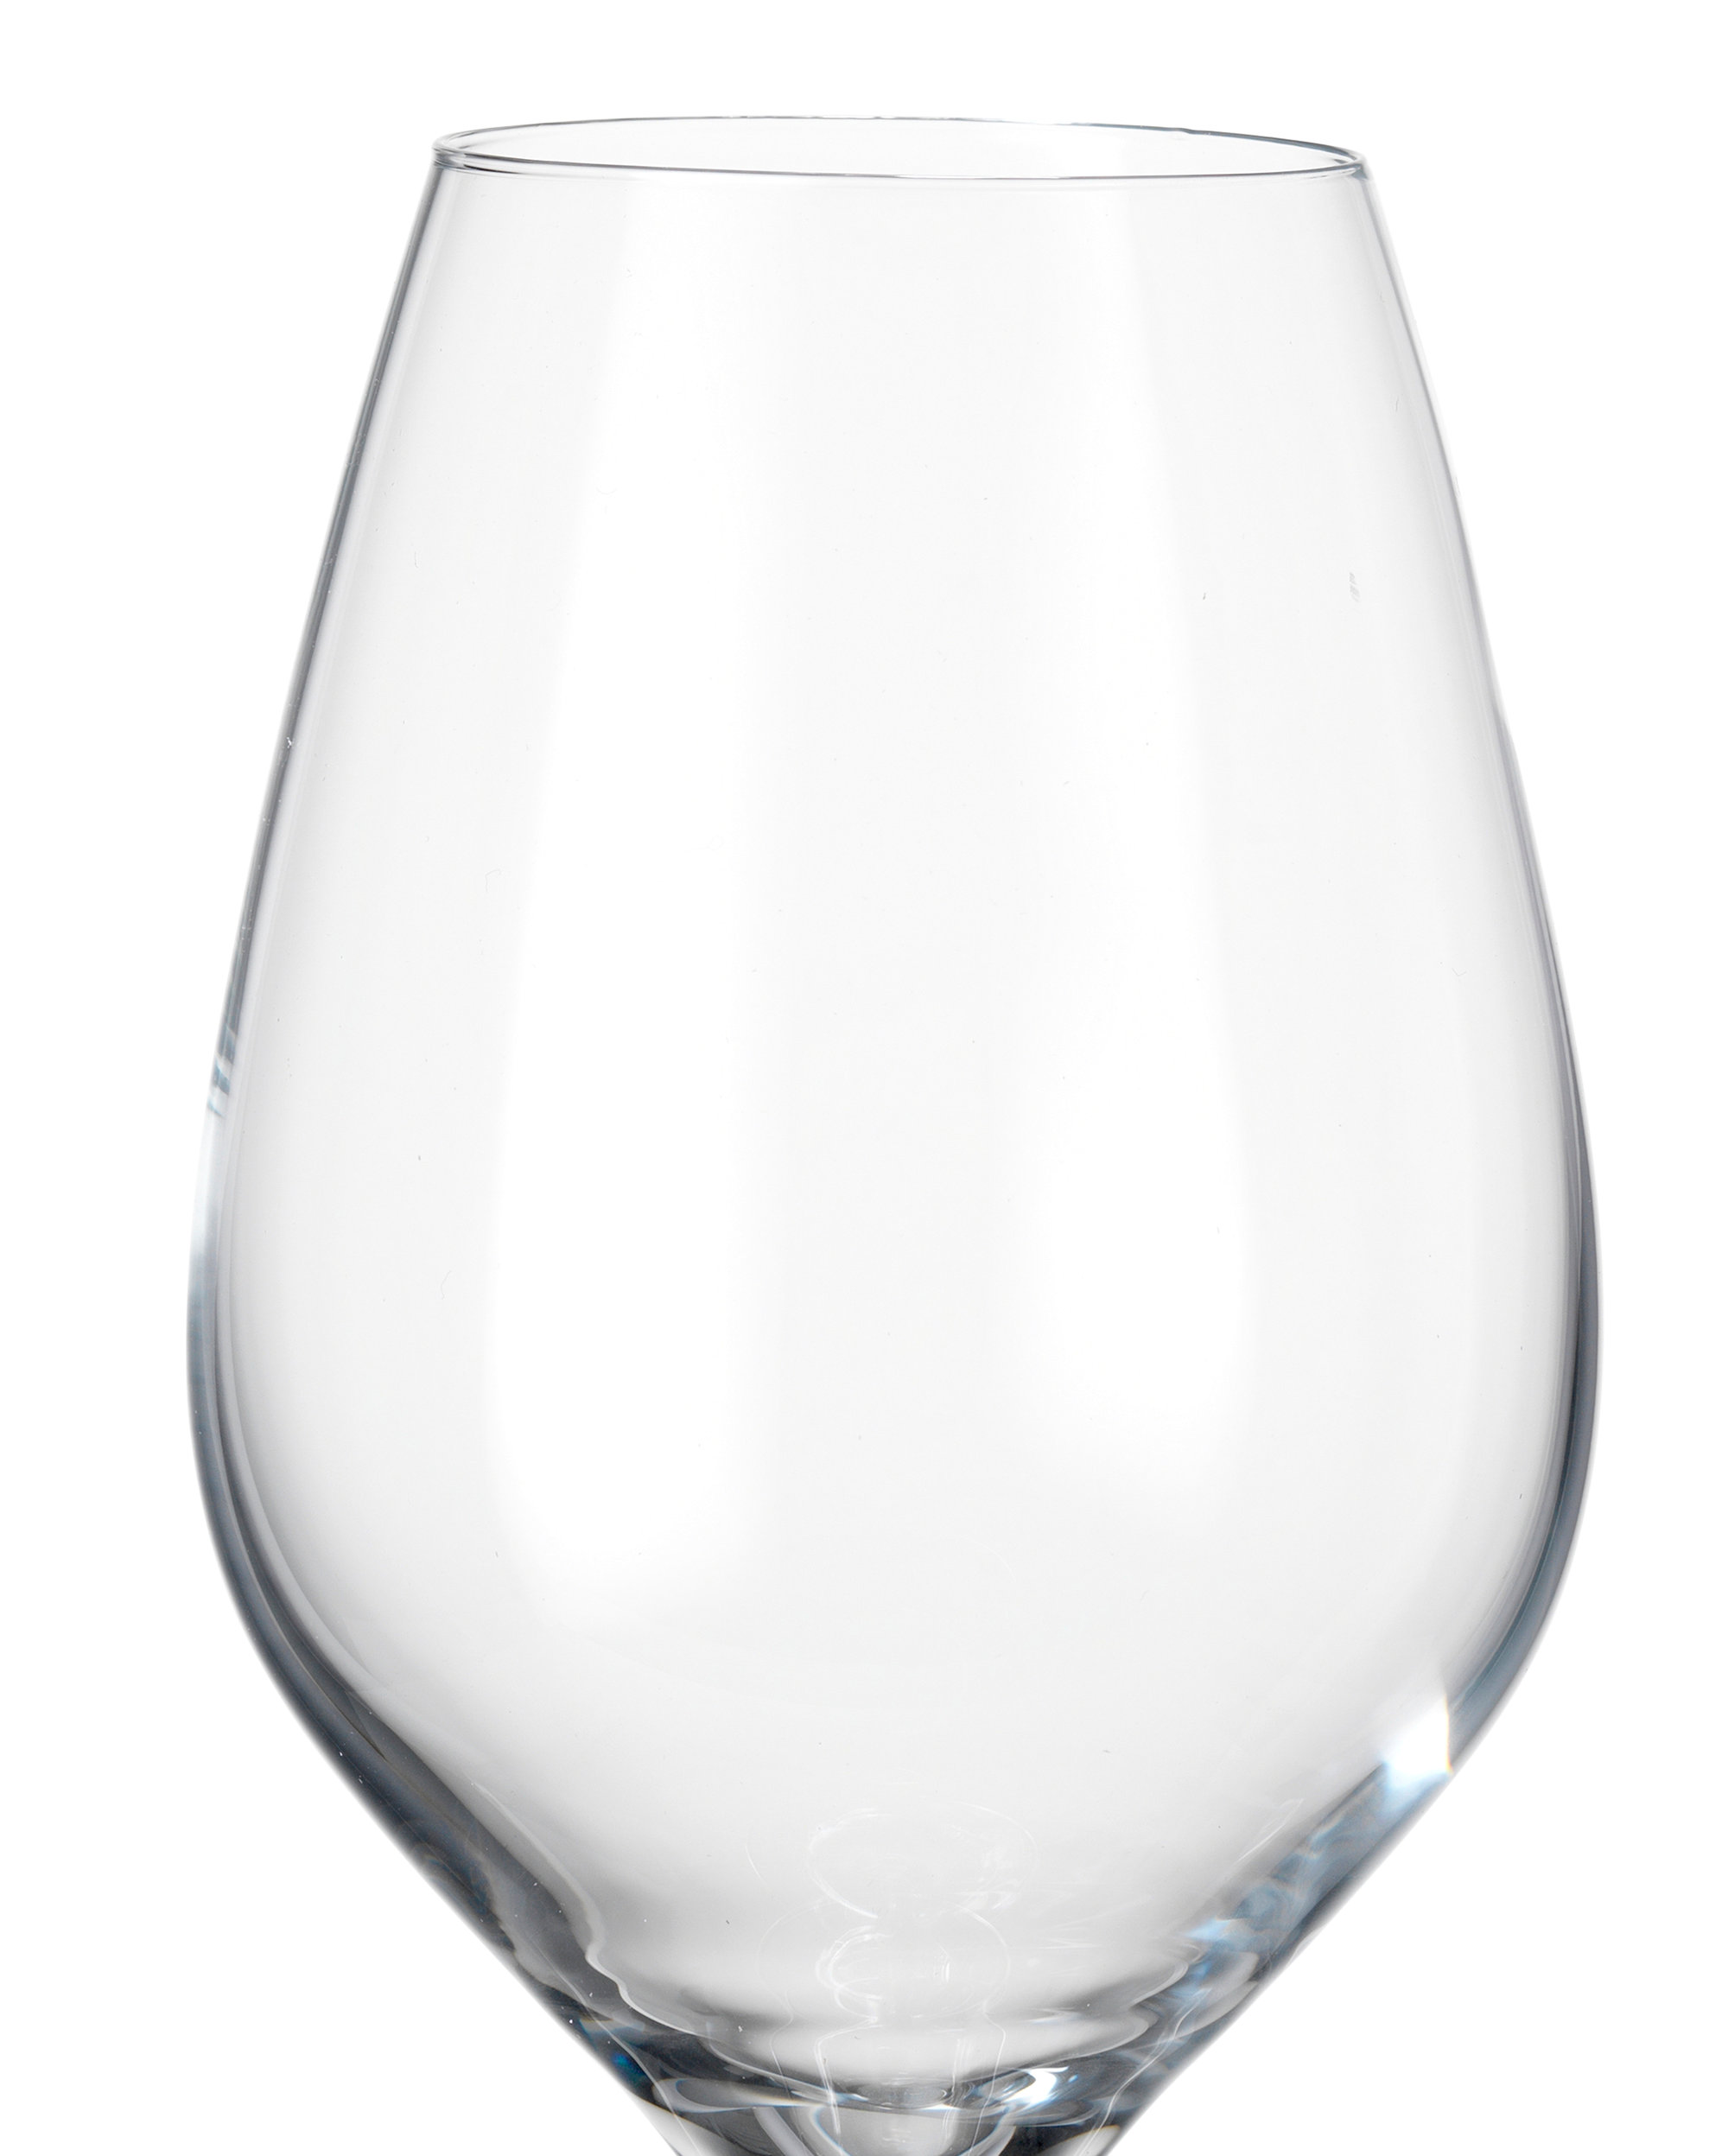 Holmegaard Cabernet Cocktail Glass, Clear, 9.8 oz, 6 PCS.